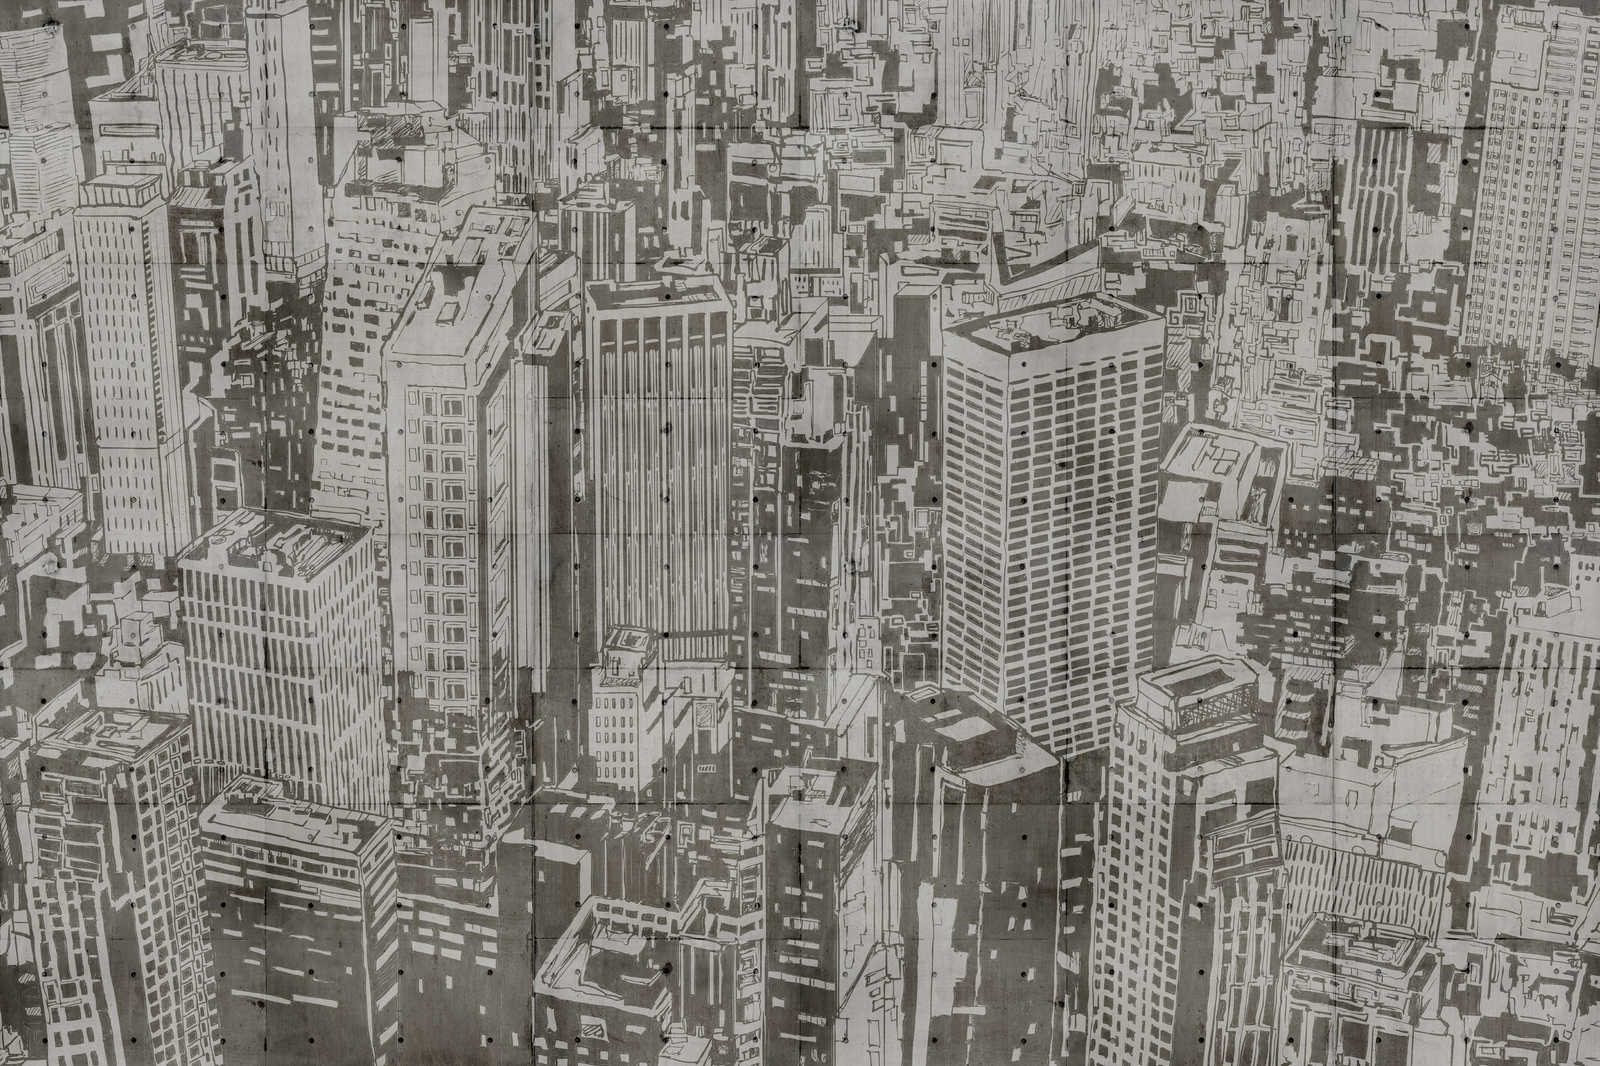             Downtown 2 - Natura qualita consistenza in cemento dipinto su tela New York Look - 0,90 m x 0,60 m
        